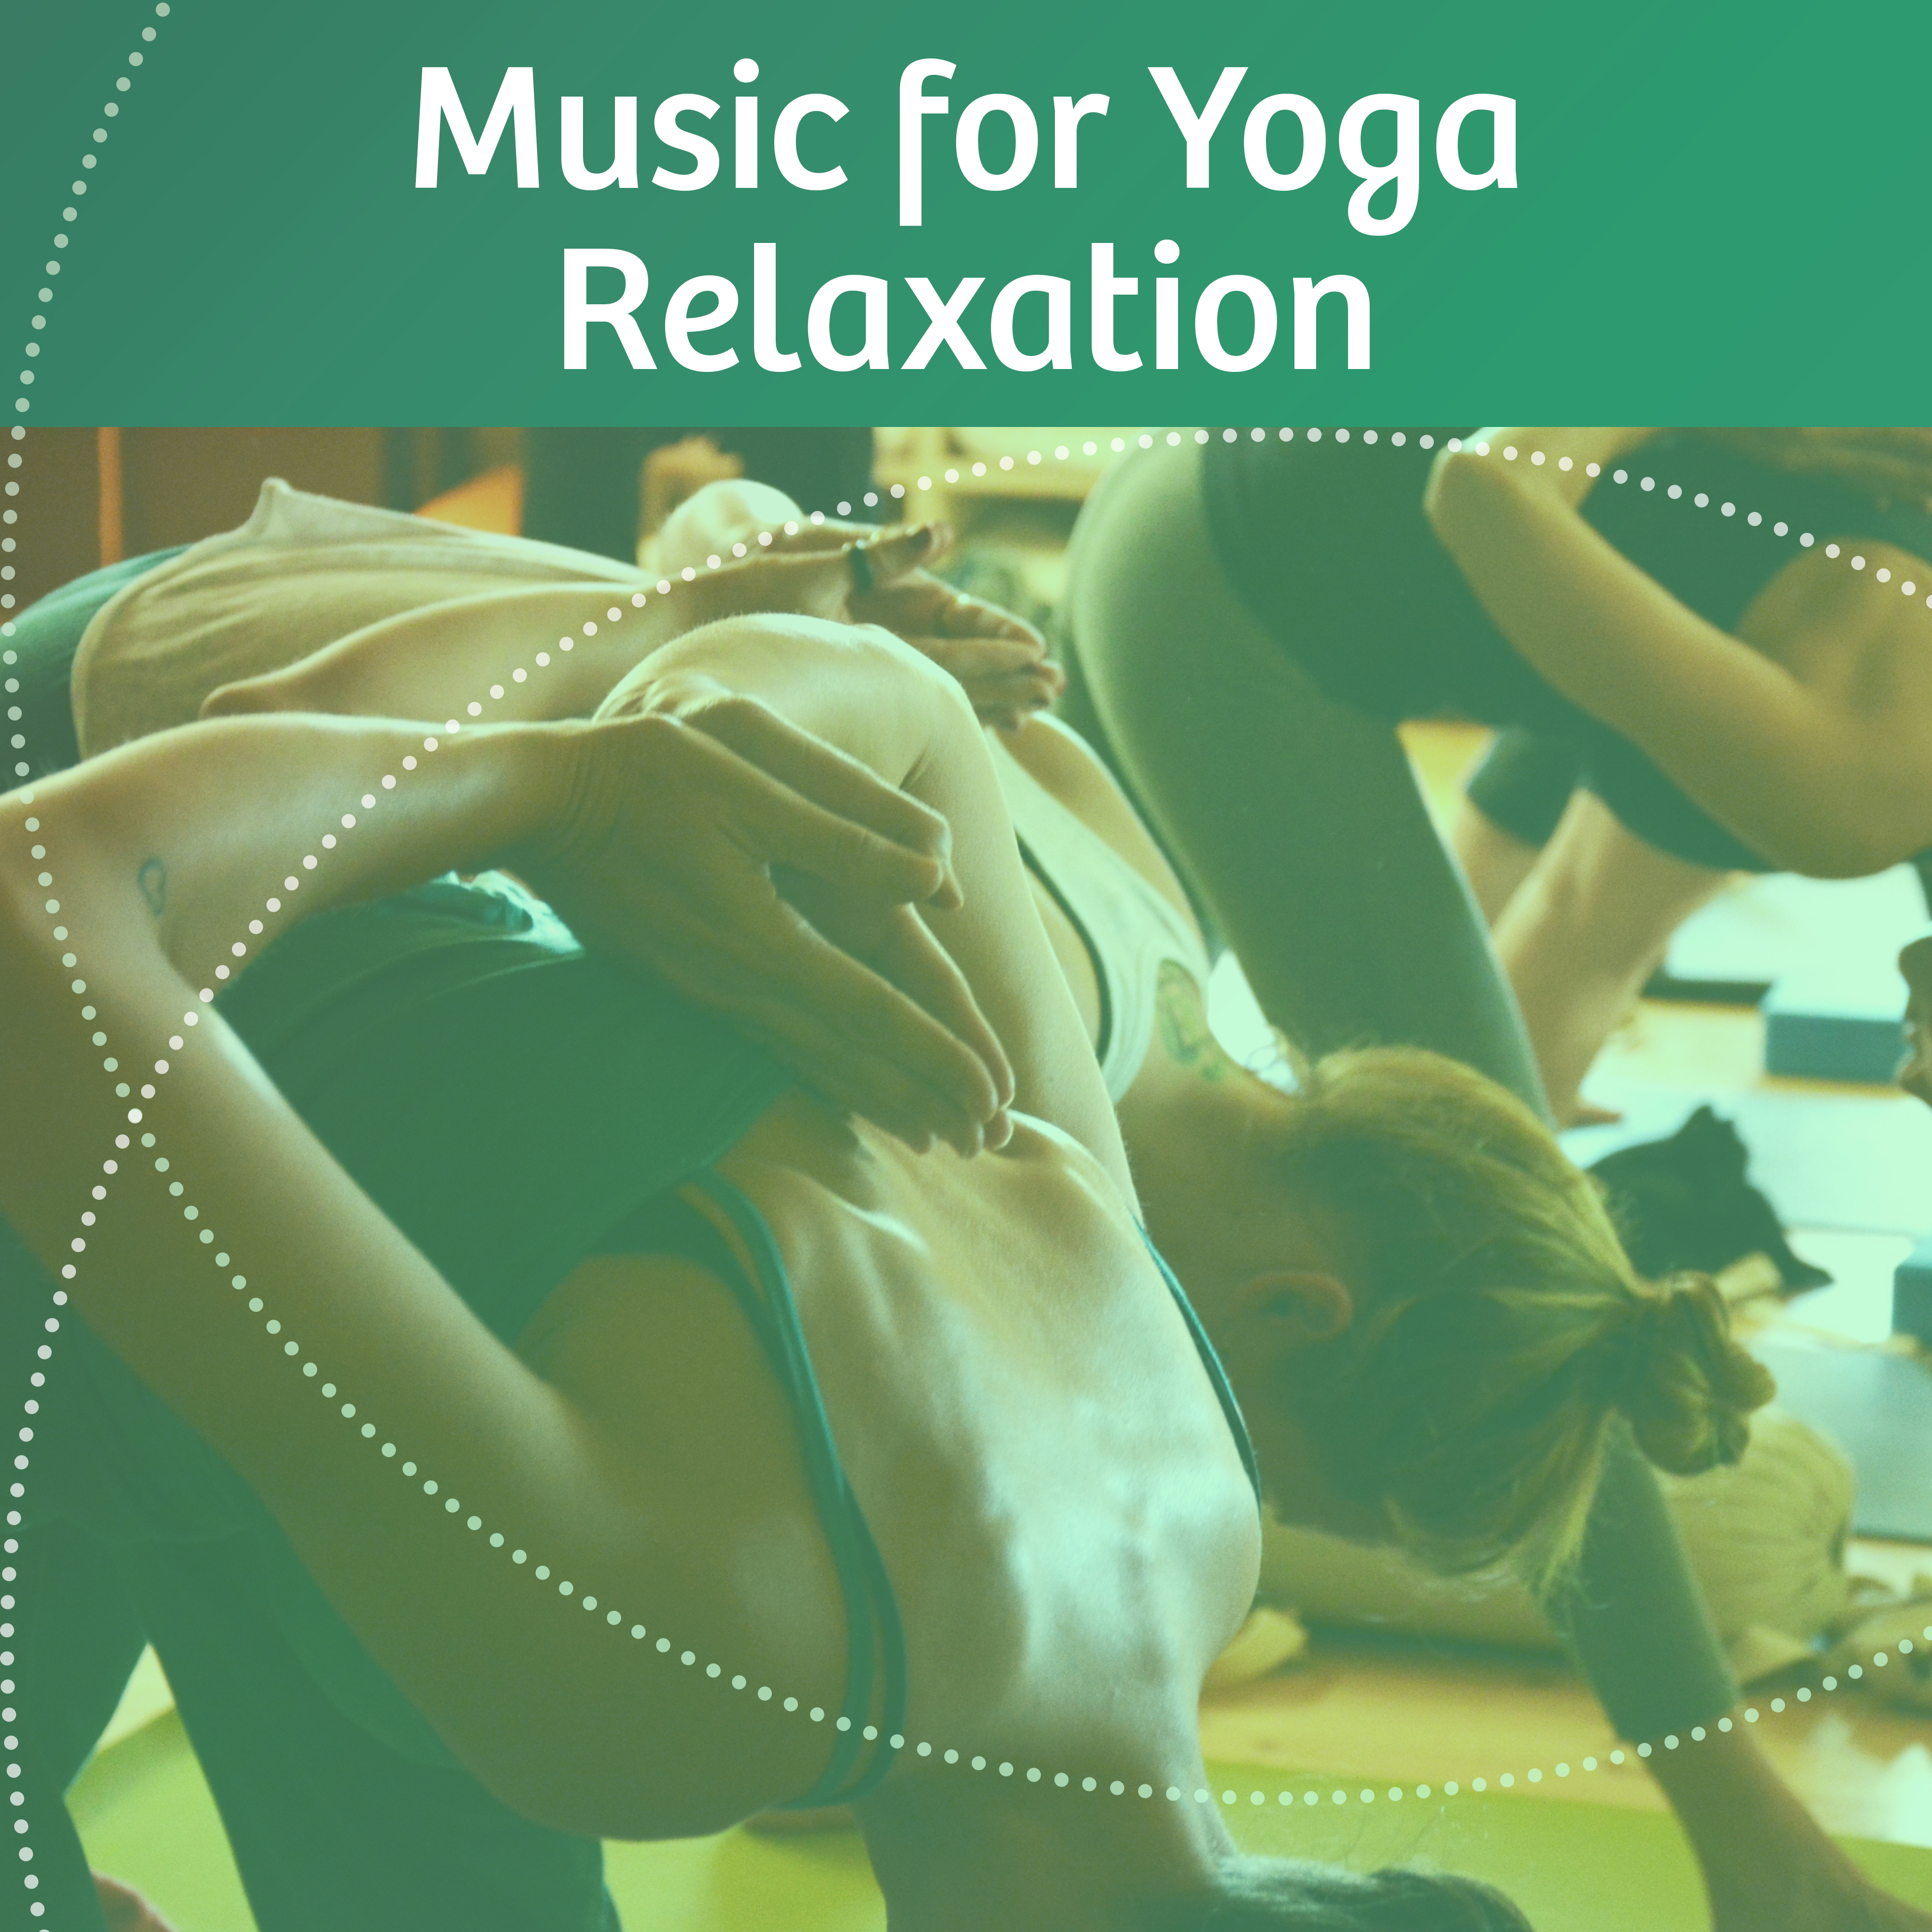 Music for Yoga Relaxation – Calm Sounds for Yoga Training, Meditation Calmness, Buddha Lounge